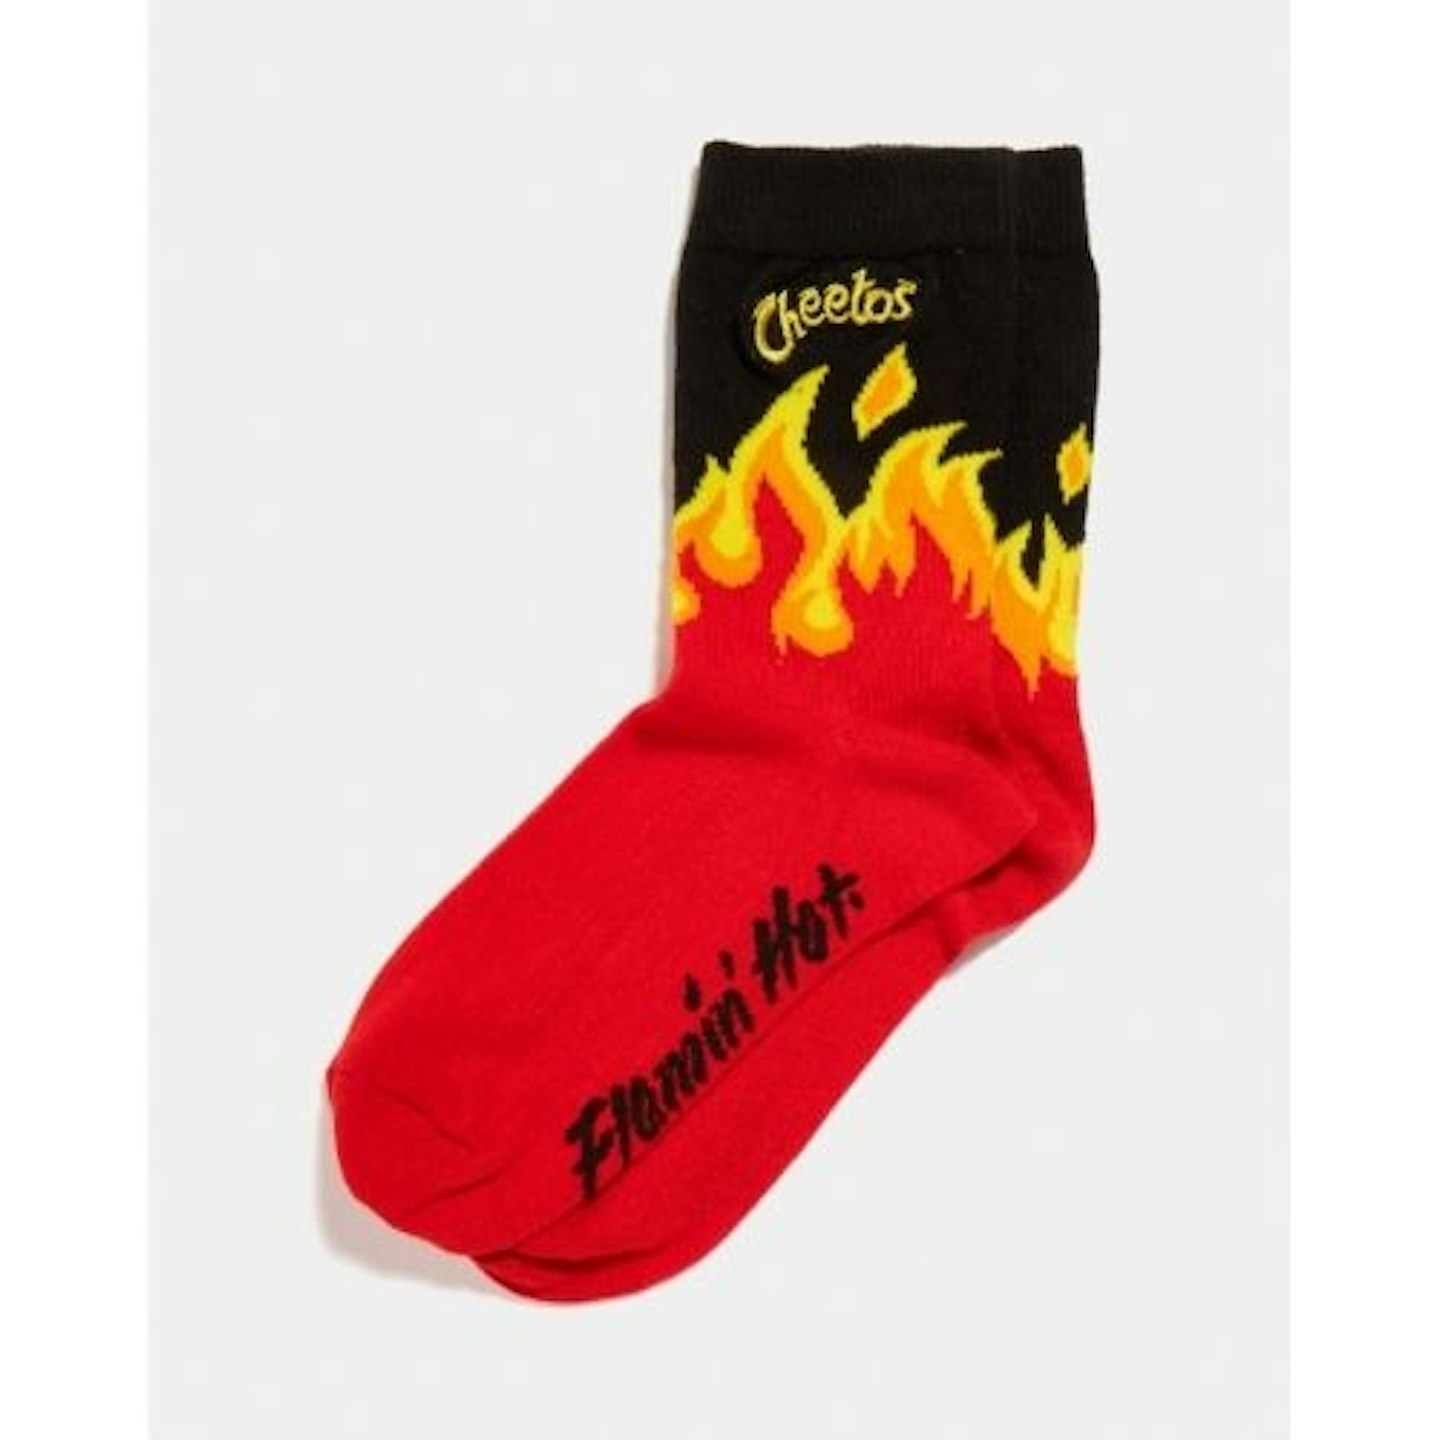 Cheetos x Skinnydip Flamin’ Hot Socks